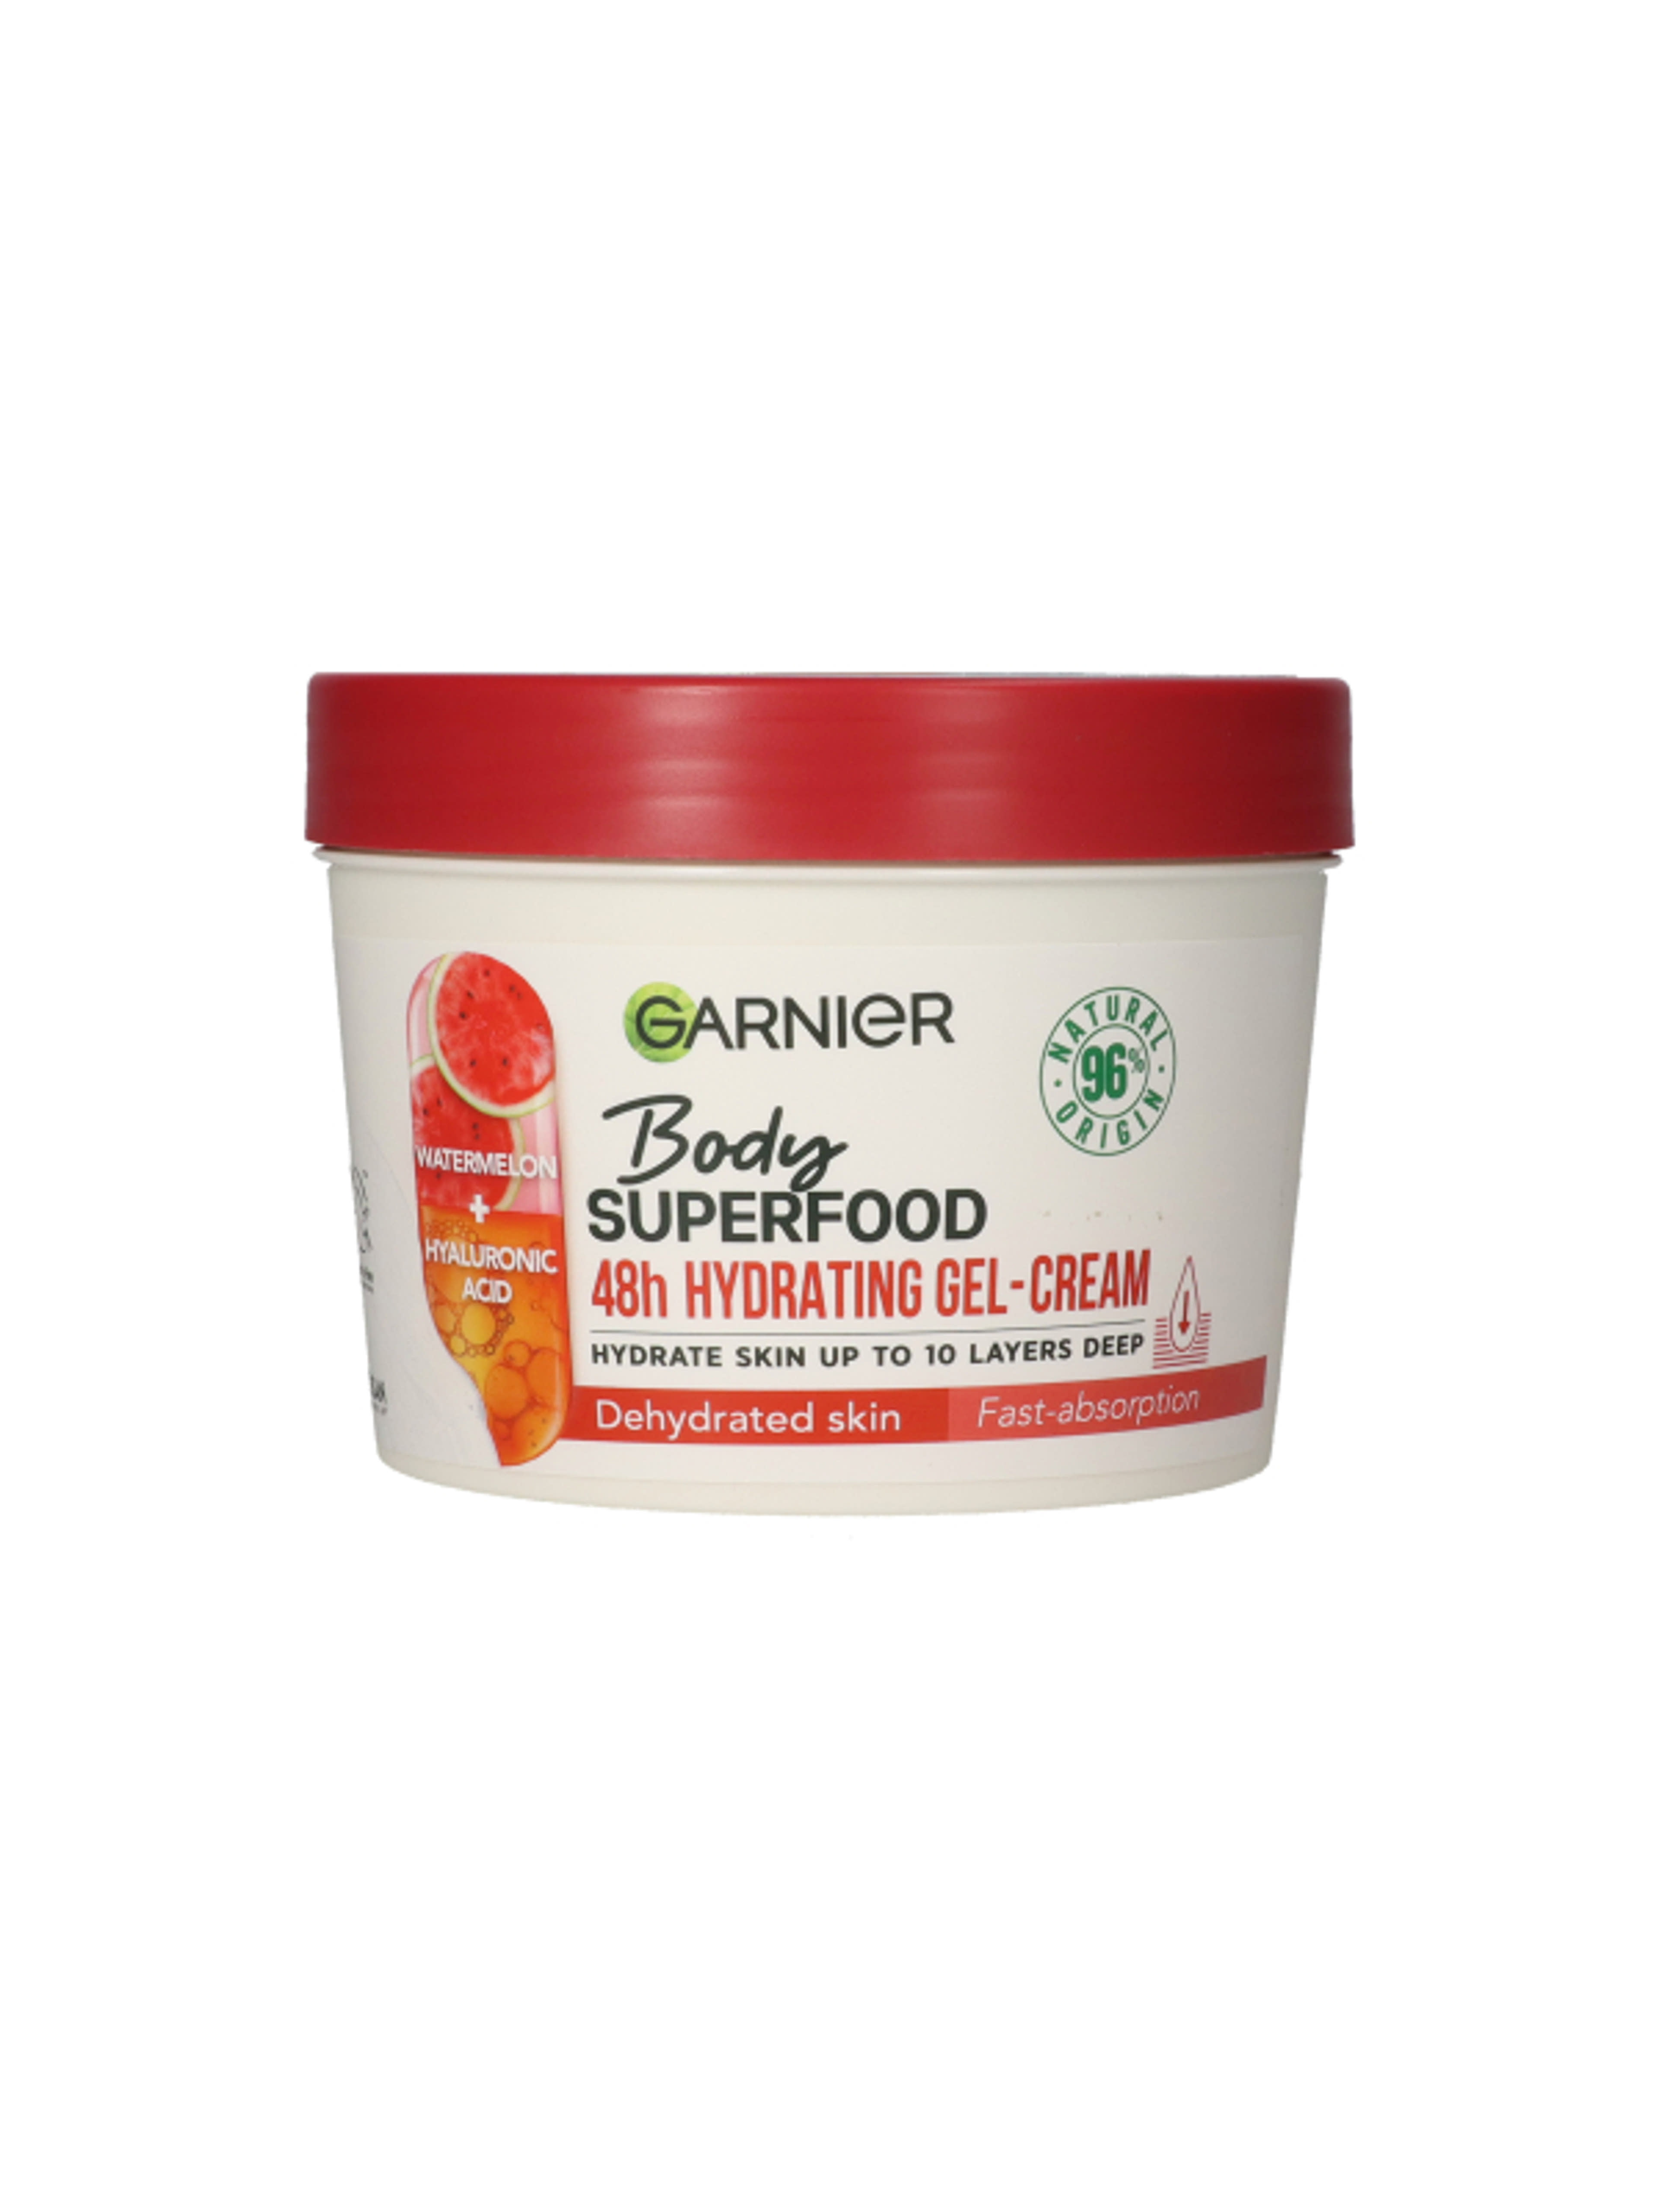 Garnier Body Superfood Watermelon testápoló krém - 380 ml